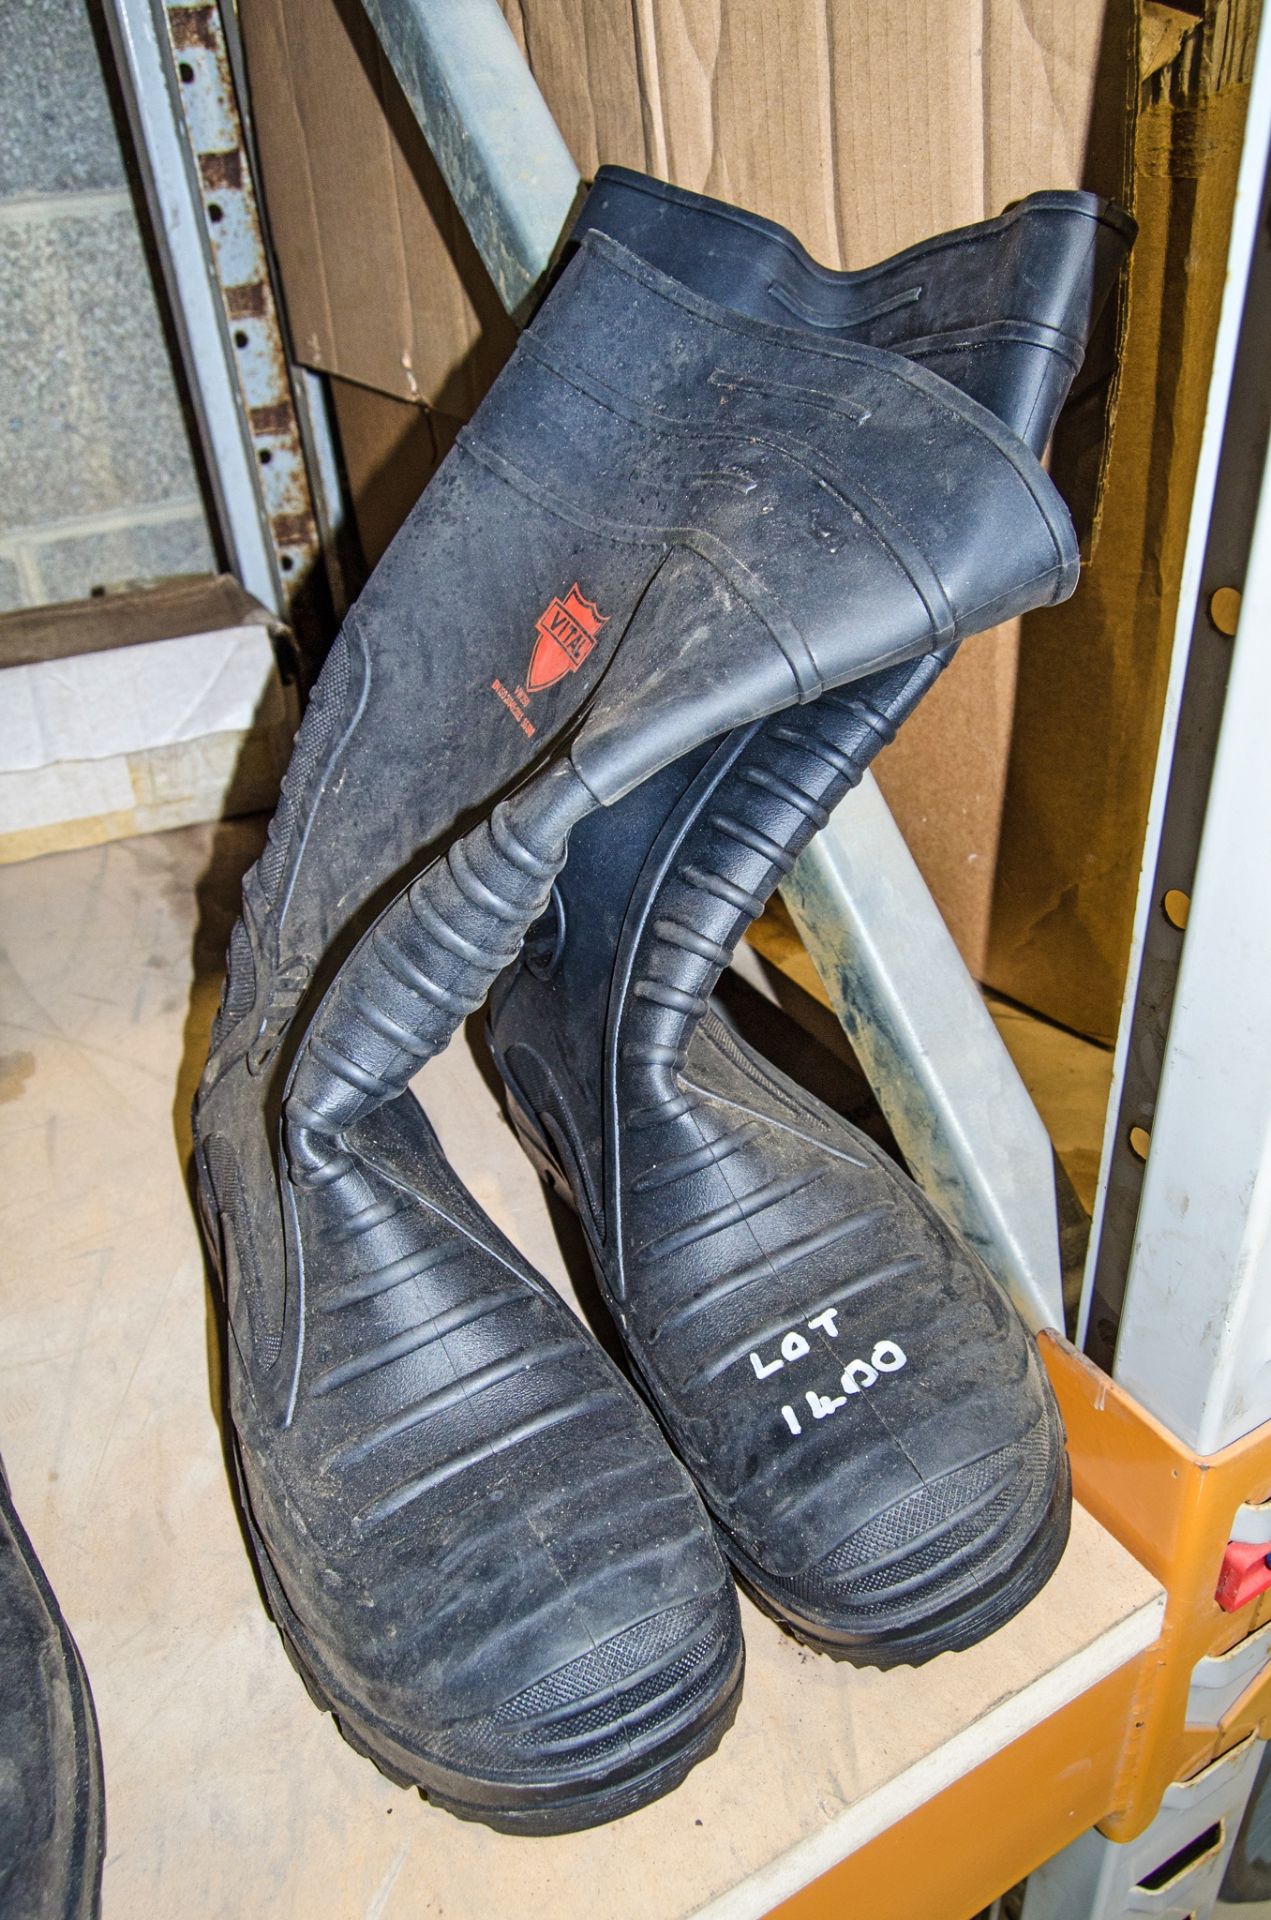 Pair of size 11 Vital steel toe cap wellington boots